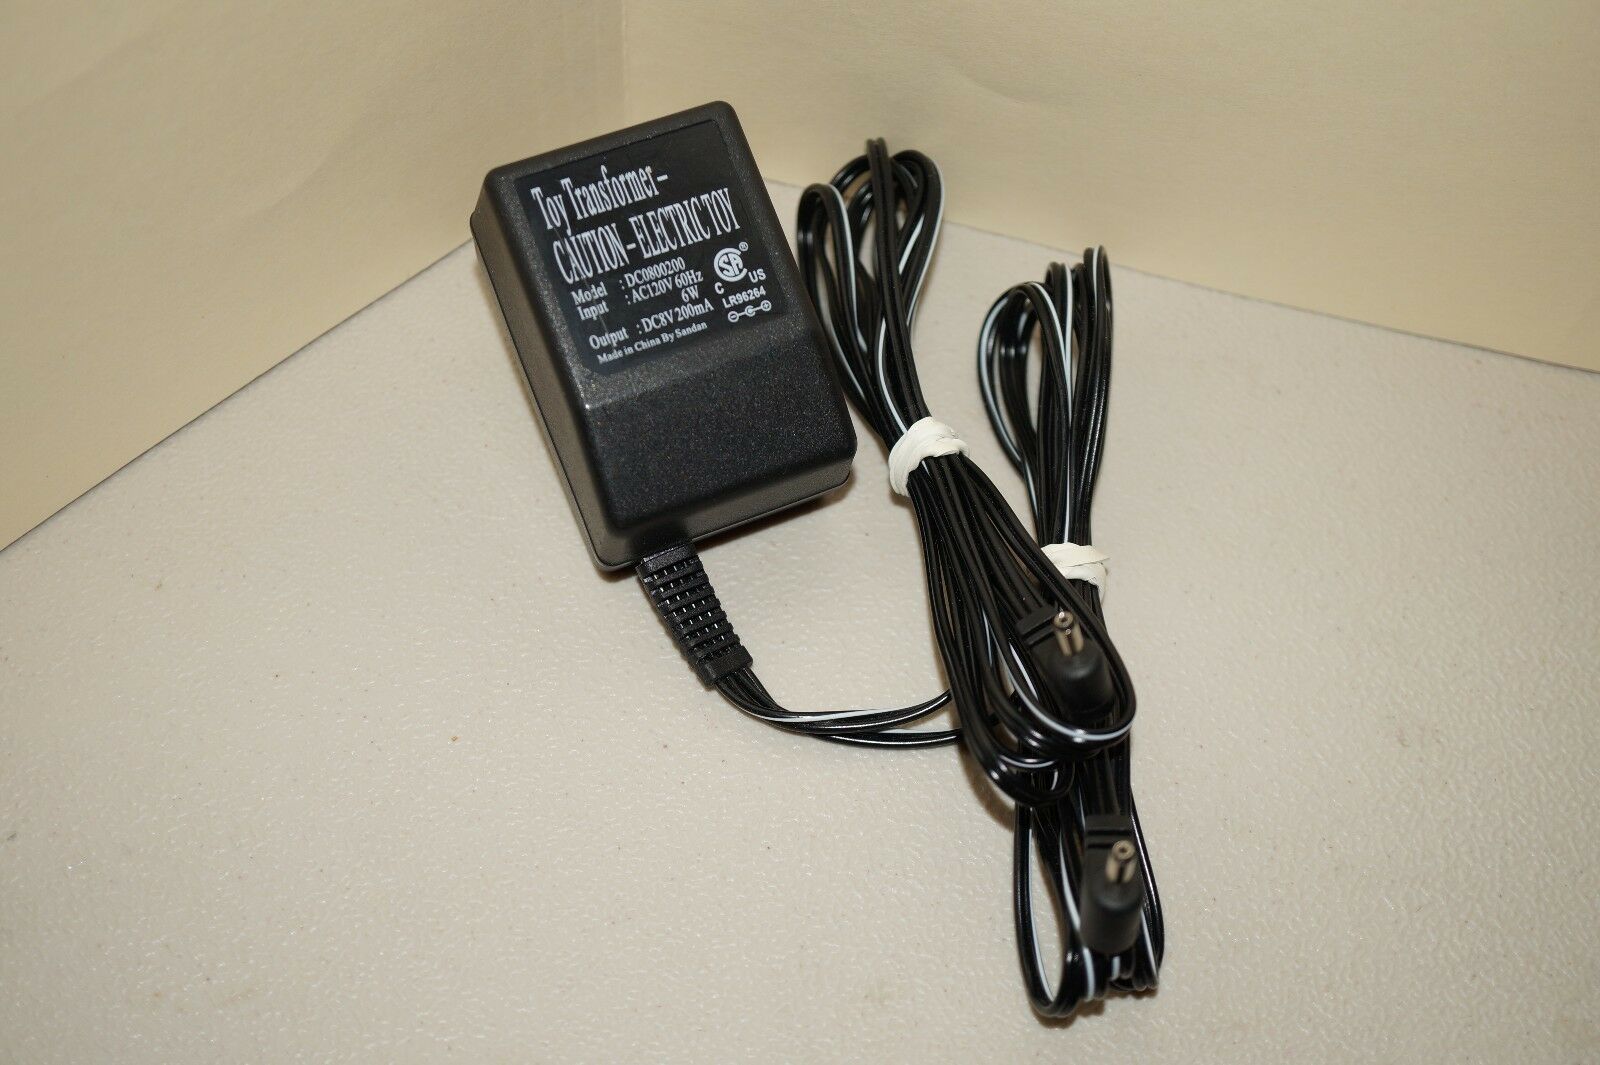 Sandan Toy Transformer AC Adapter for Electric Toy DC0800200 Brand: Sandan Model: DC0800200 MPN: DC0800200 Output